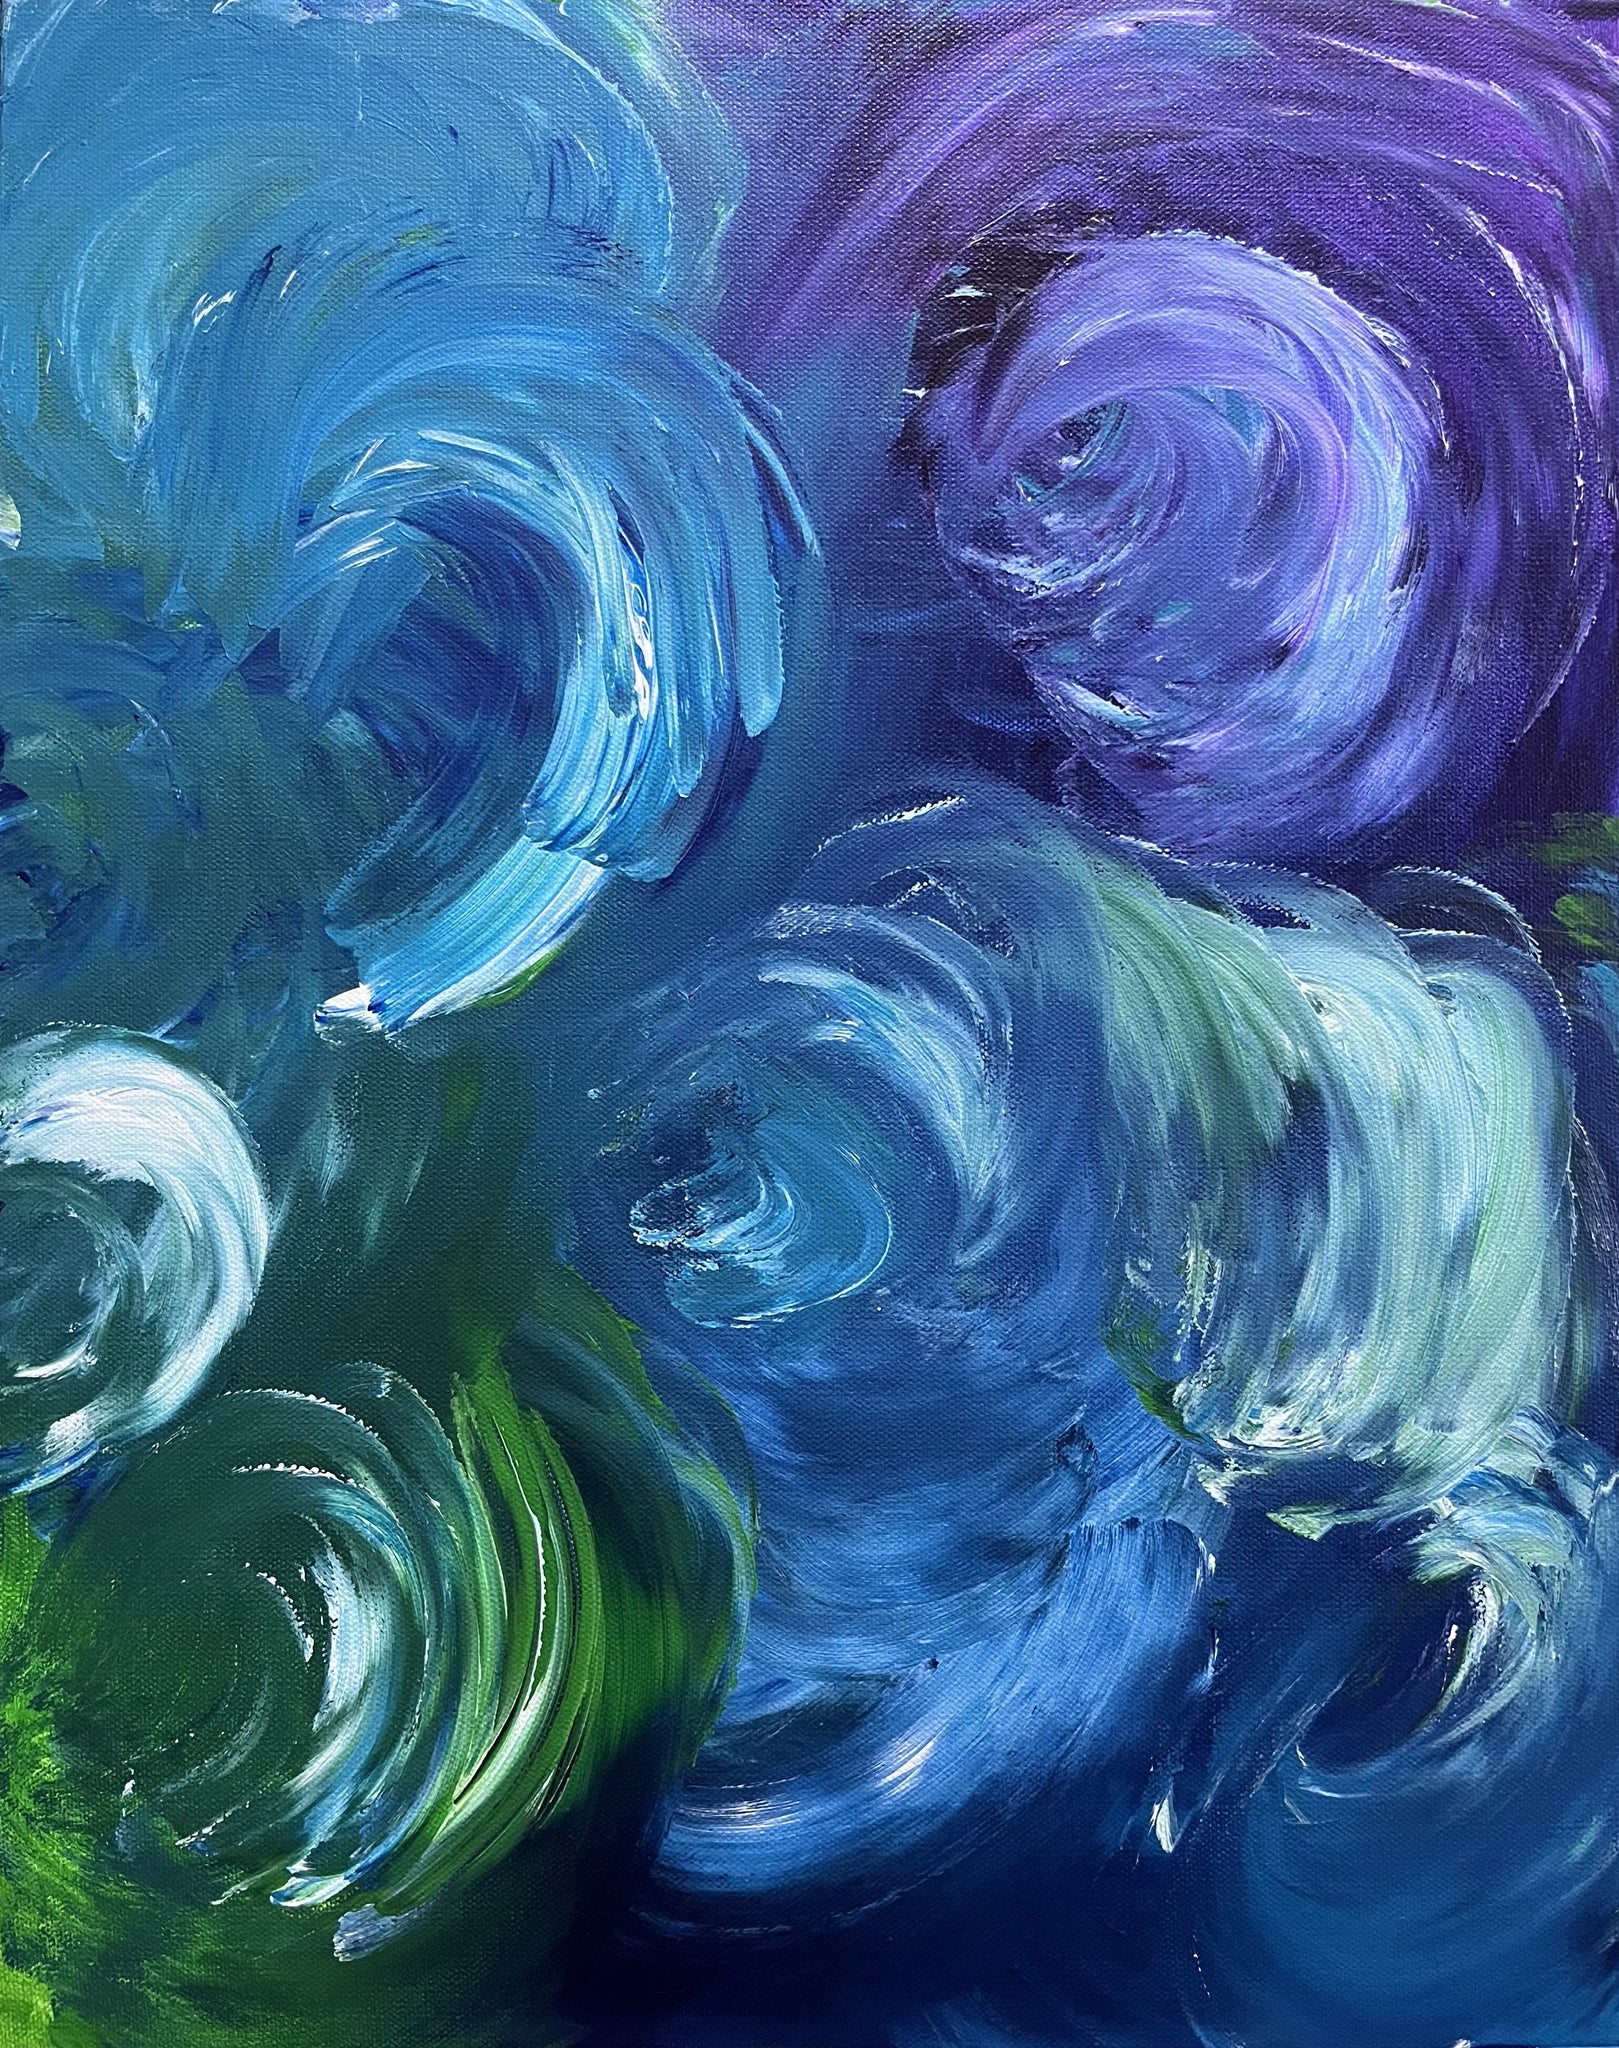 Whirlpool abstract art original acrylic painting